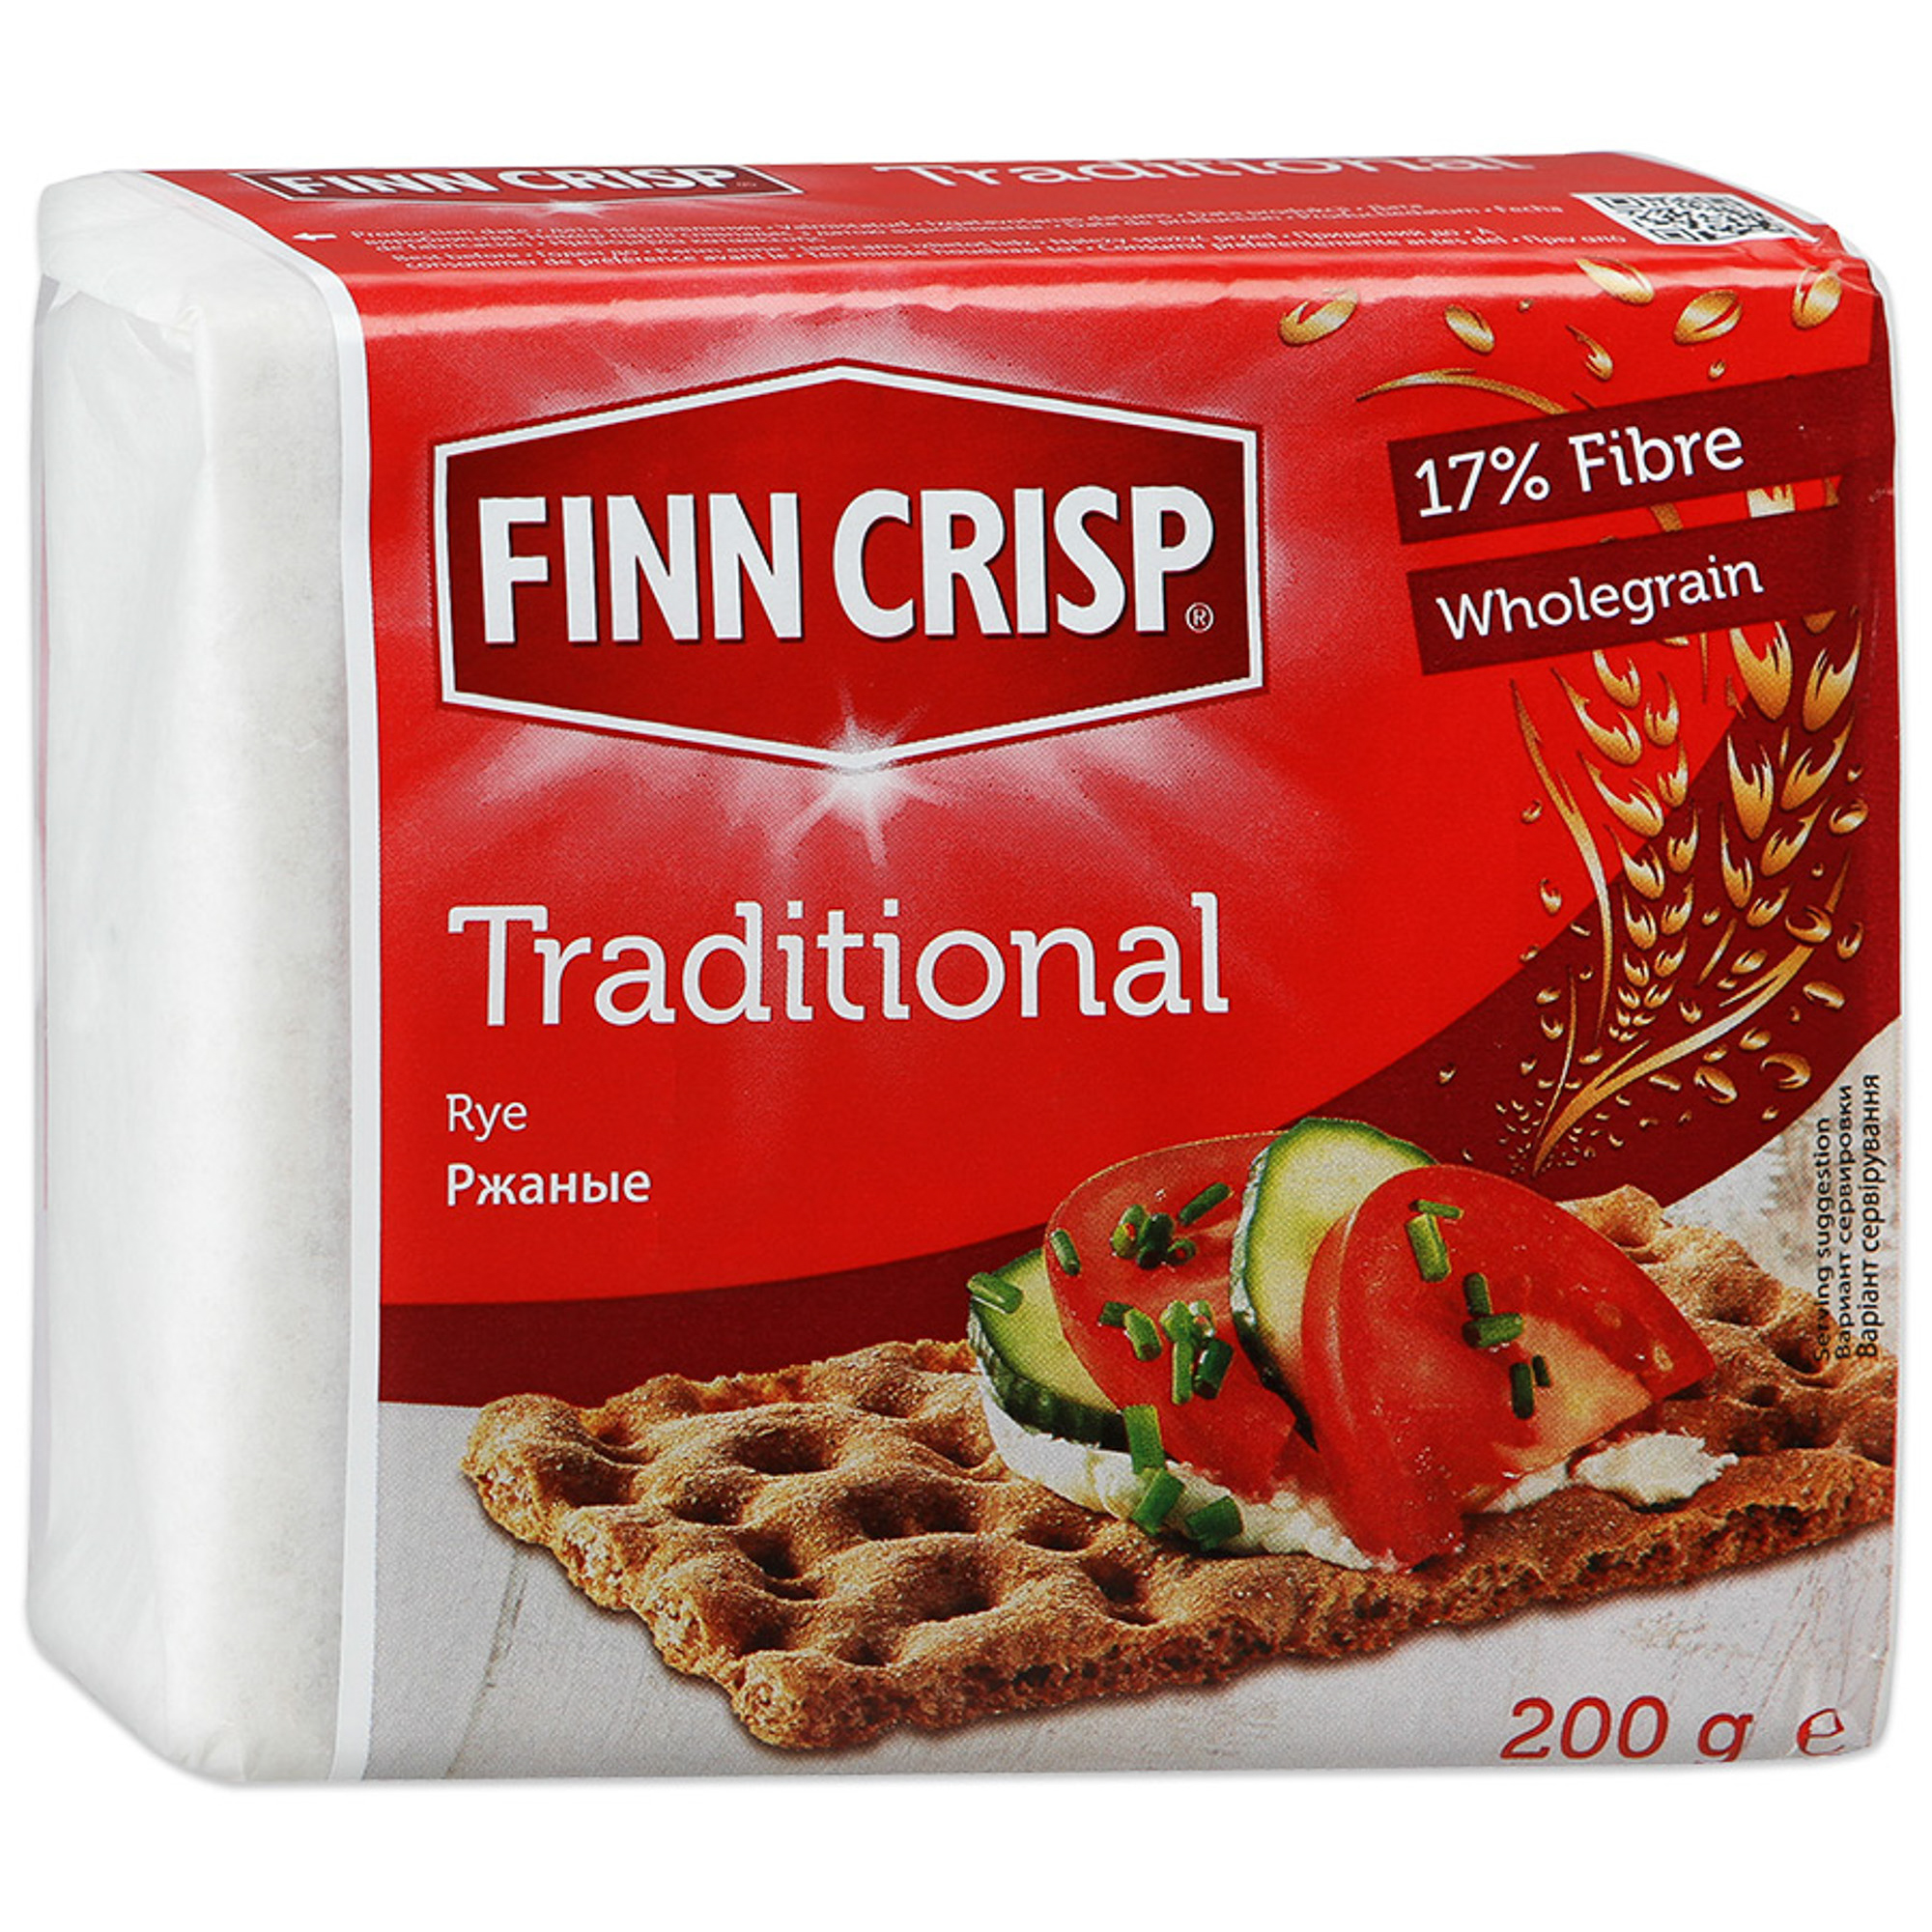 Хлебцы Finn crisp Original